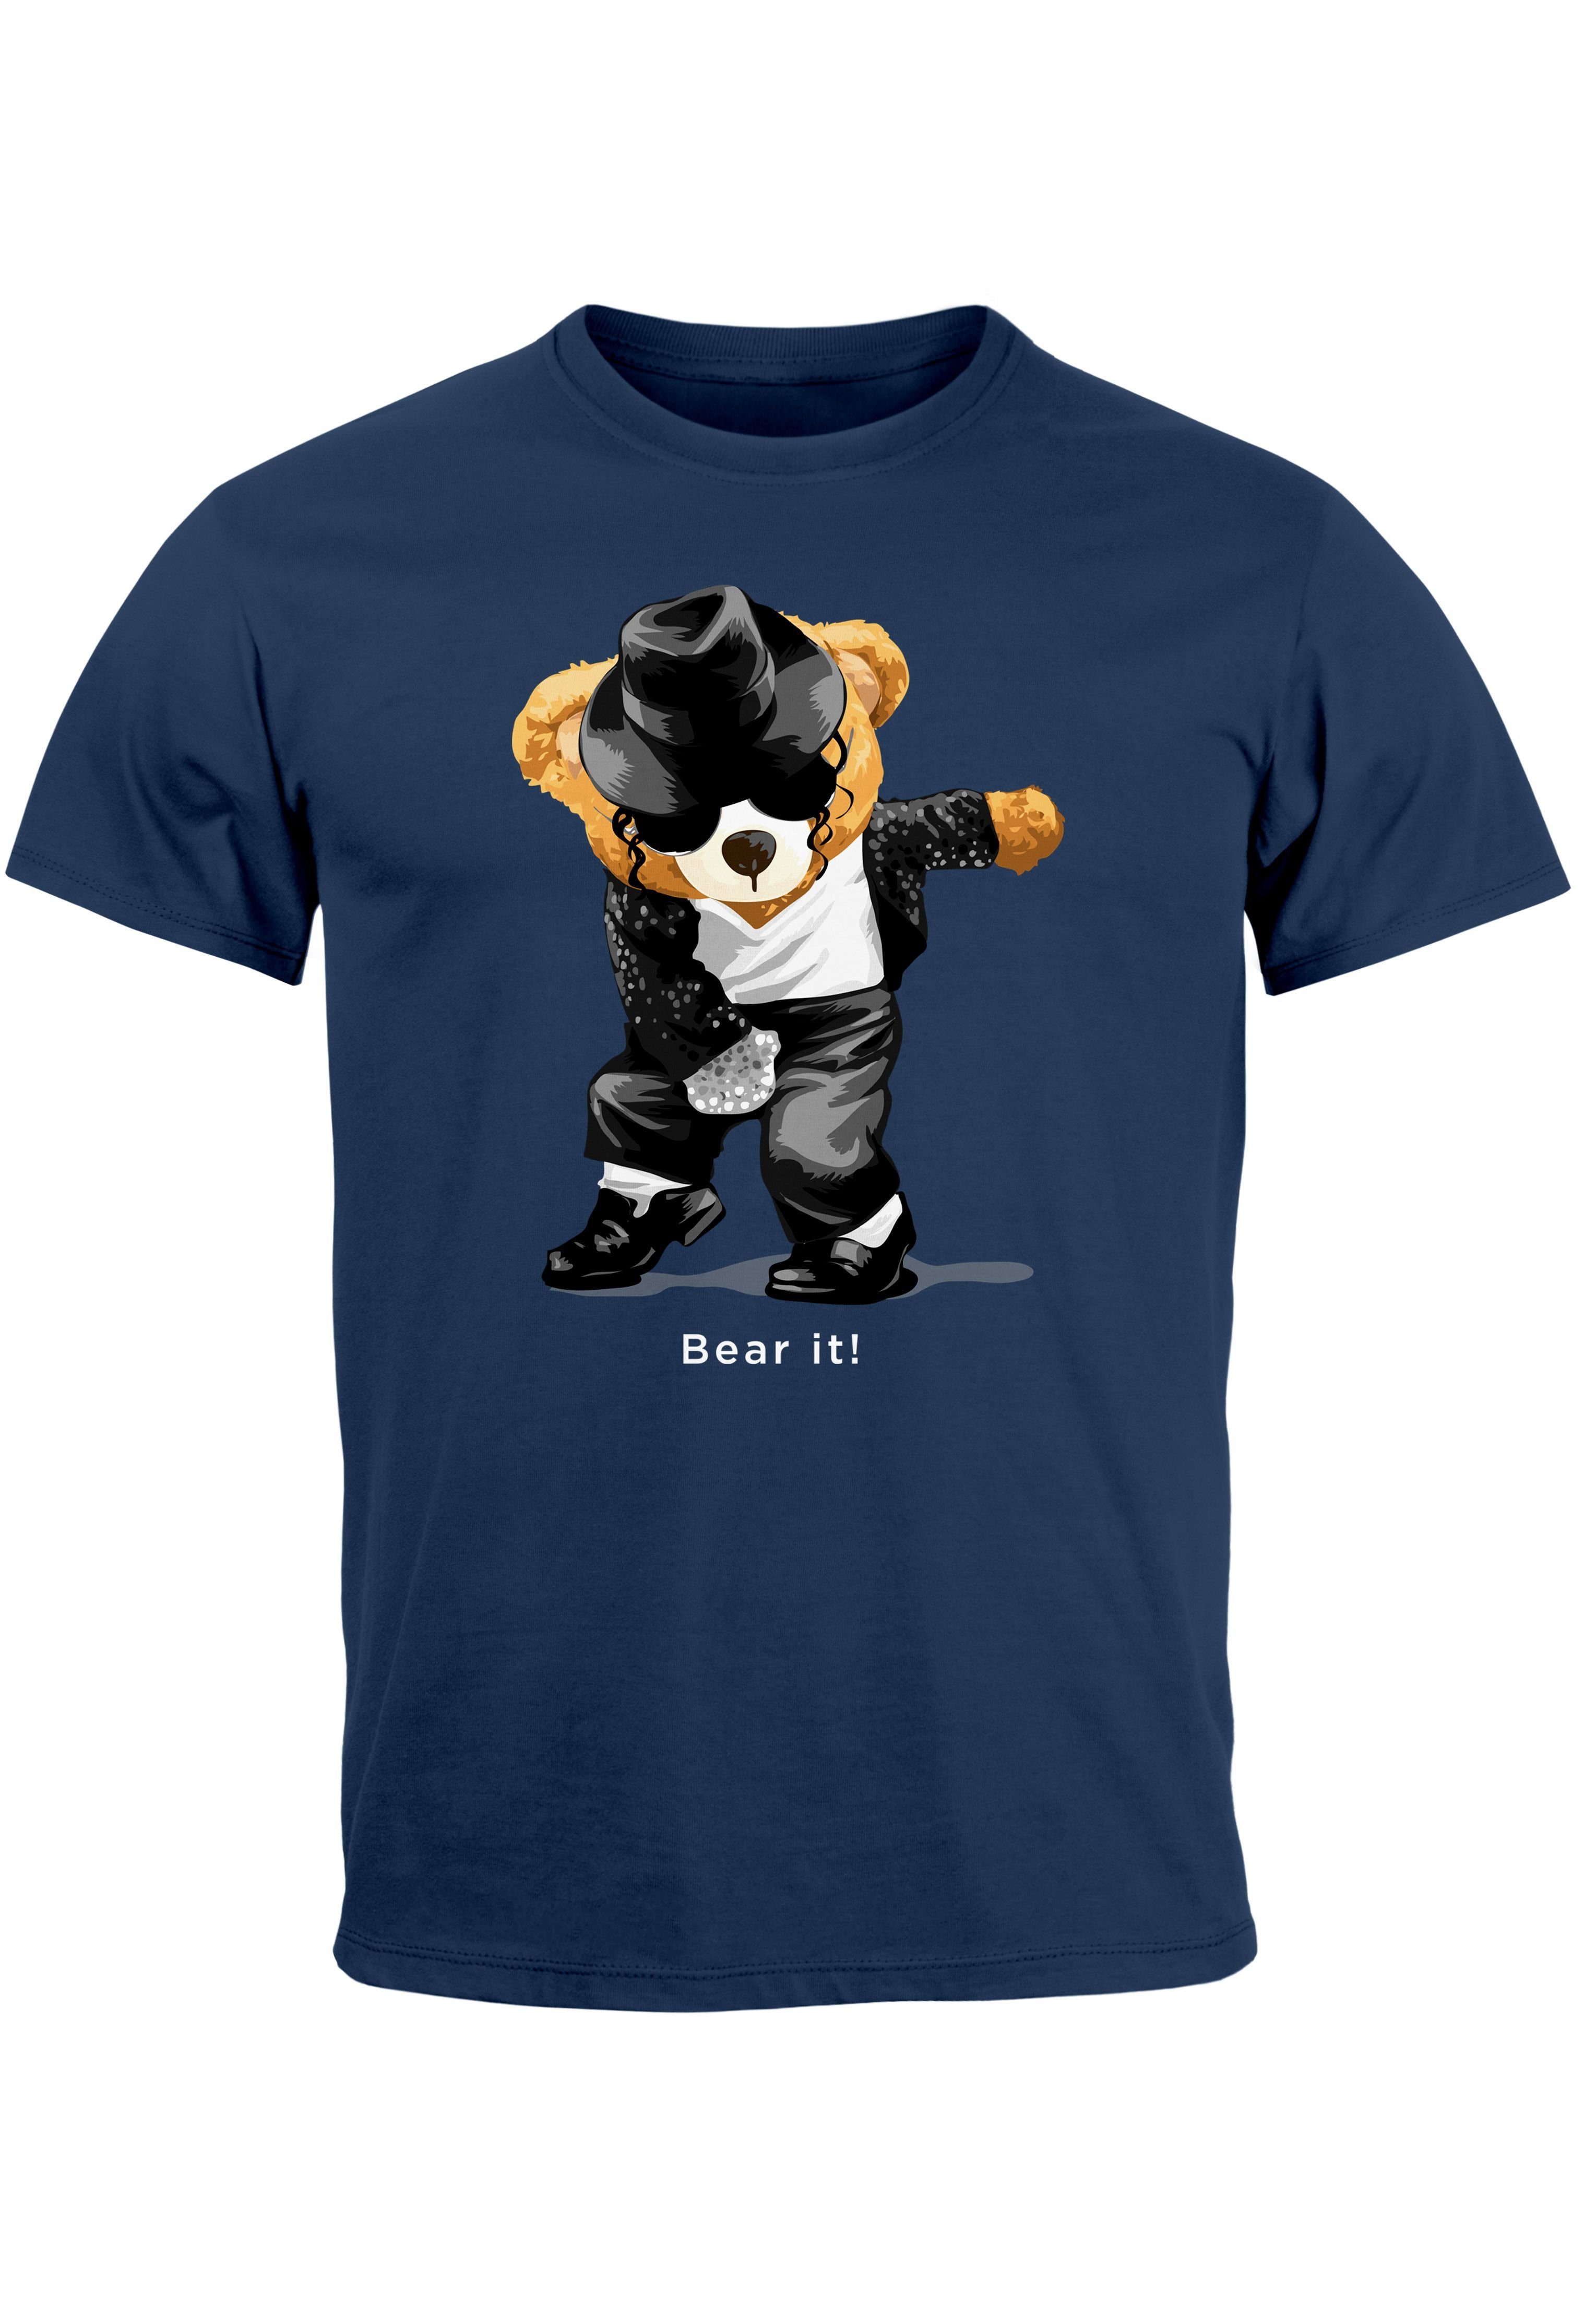 Neverless Print-Shirt Herren T-Shirt Jackson Bear Parodie Bear it! Teddy Bär Musik Print Auf mit Print navy